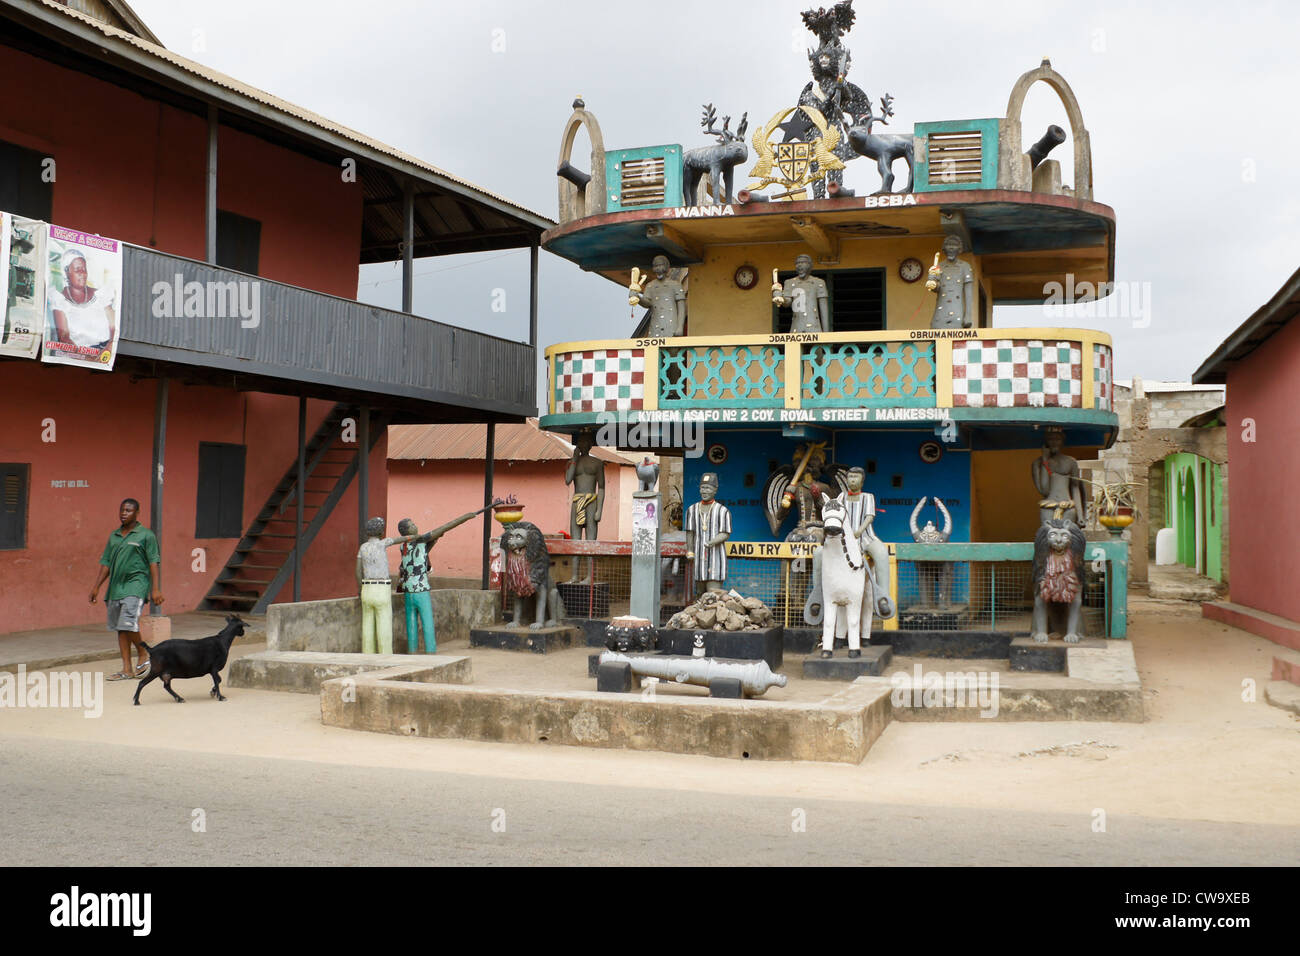 Military posuban (shrine), Mankessim, Ghana Stock Photo